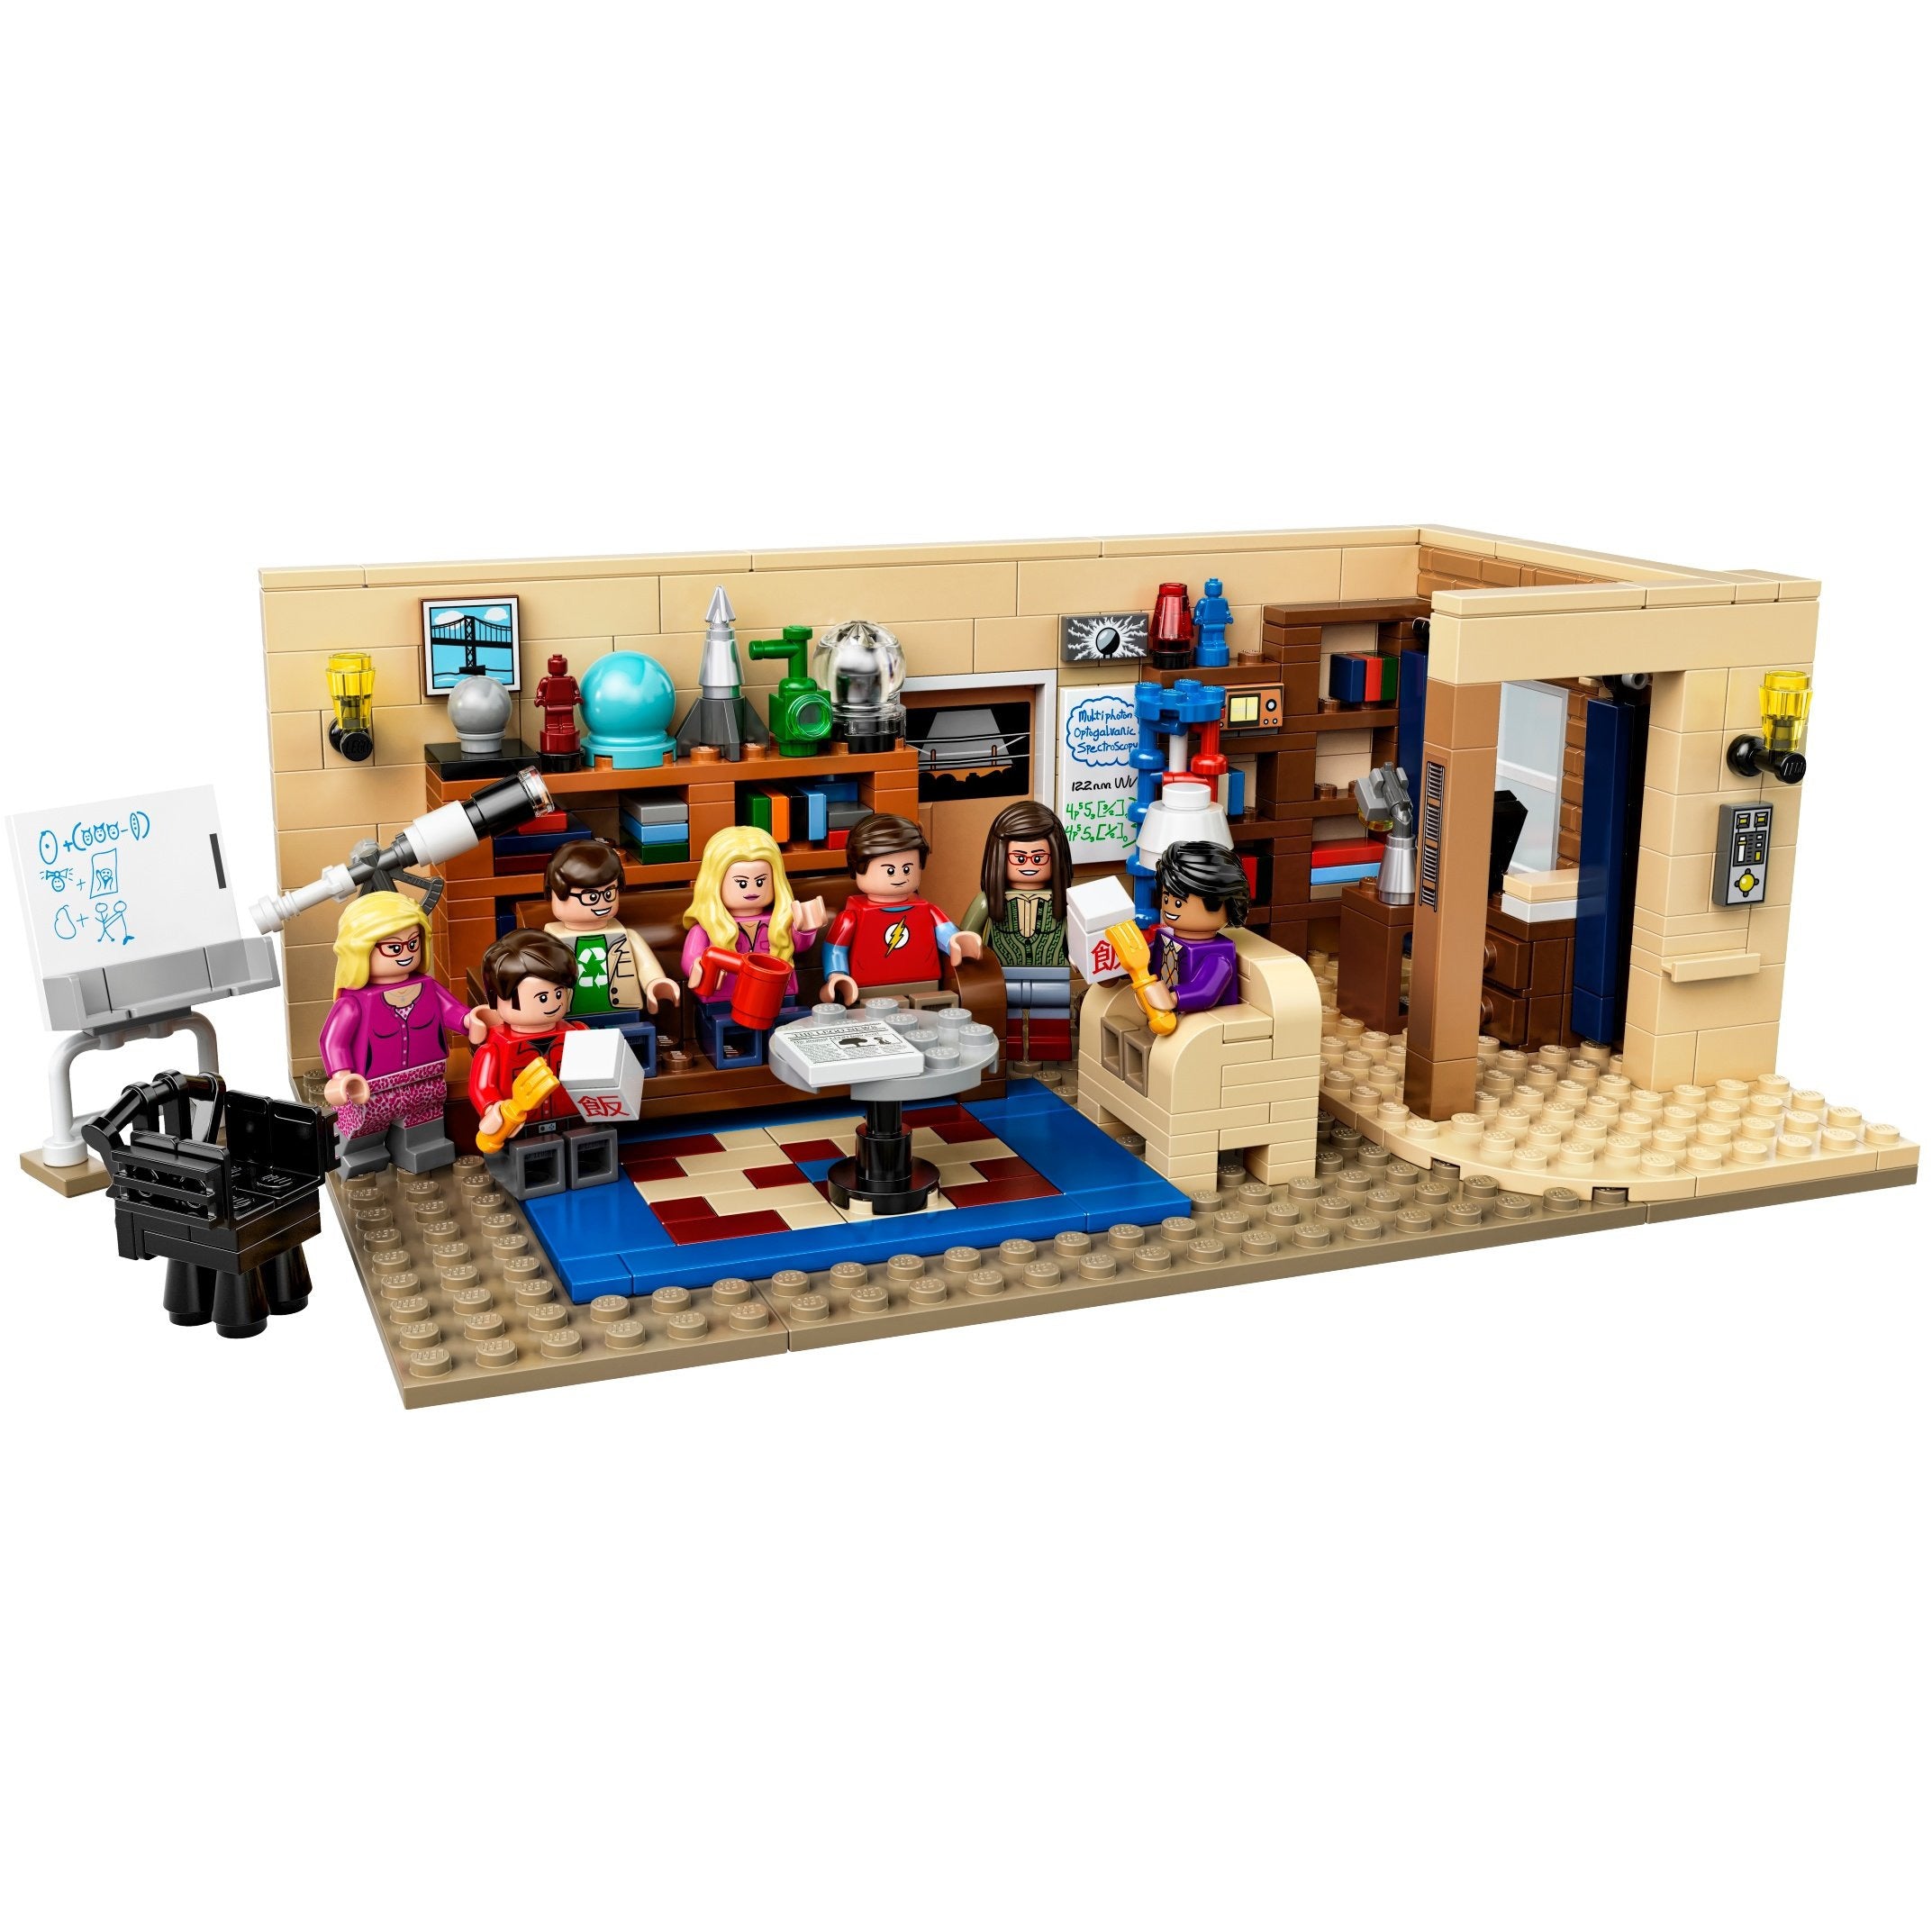 Lego Ideas: The Big Bang Theory 21302